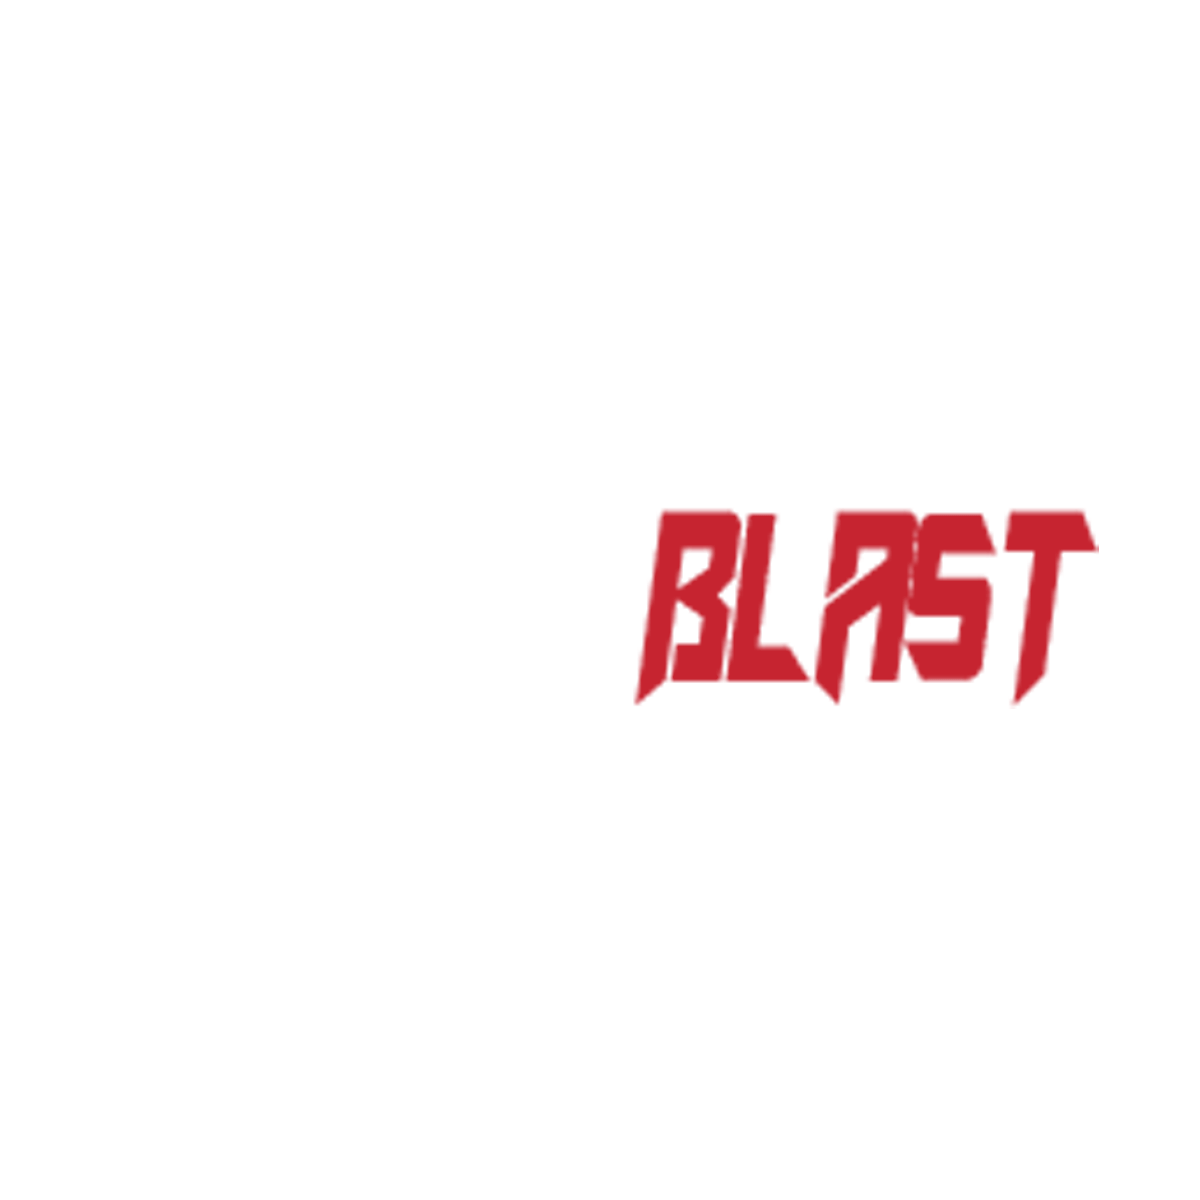 Thunder Blast Stun Guns Wholesale Supplier 